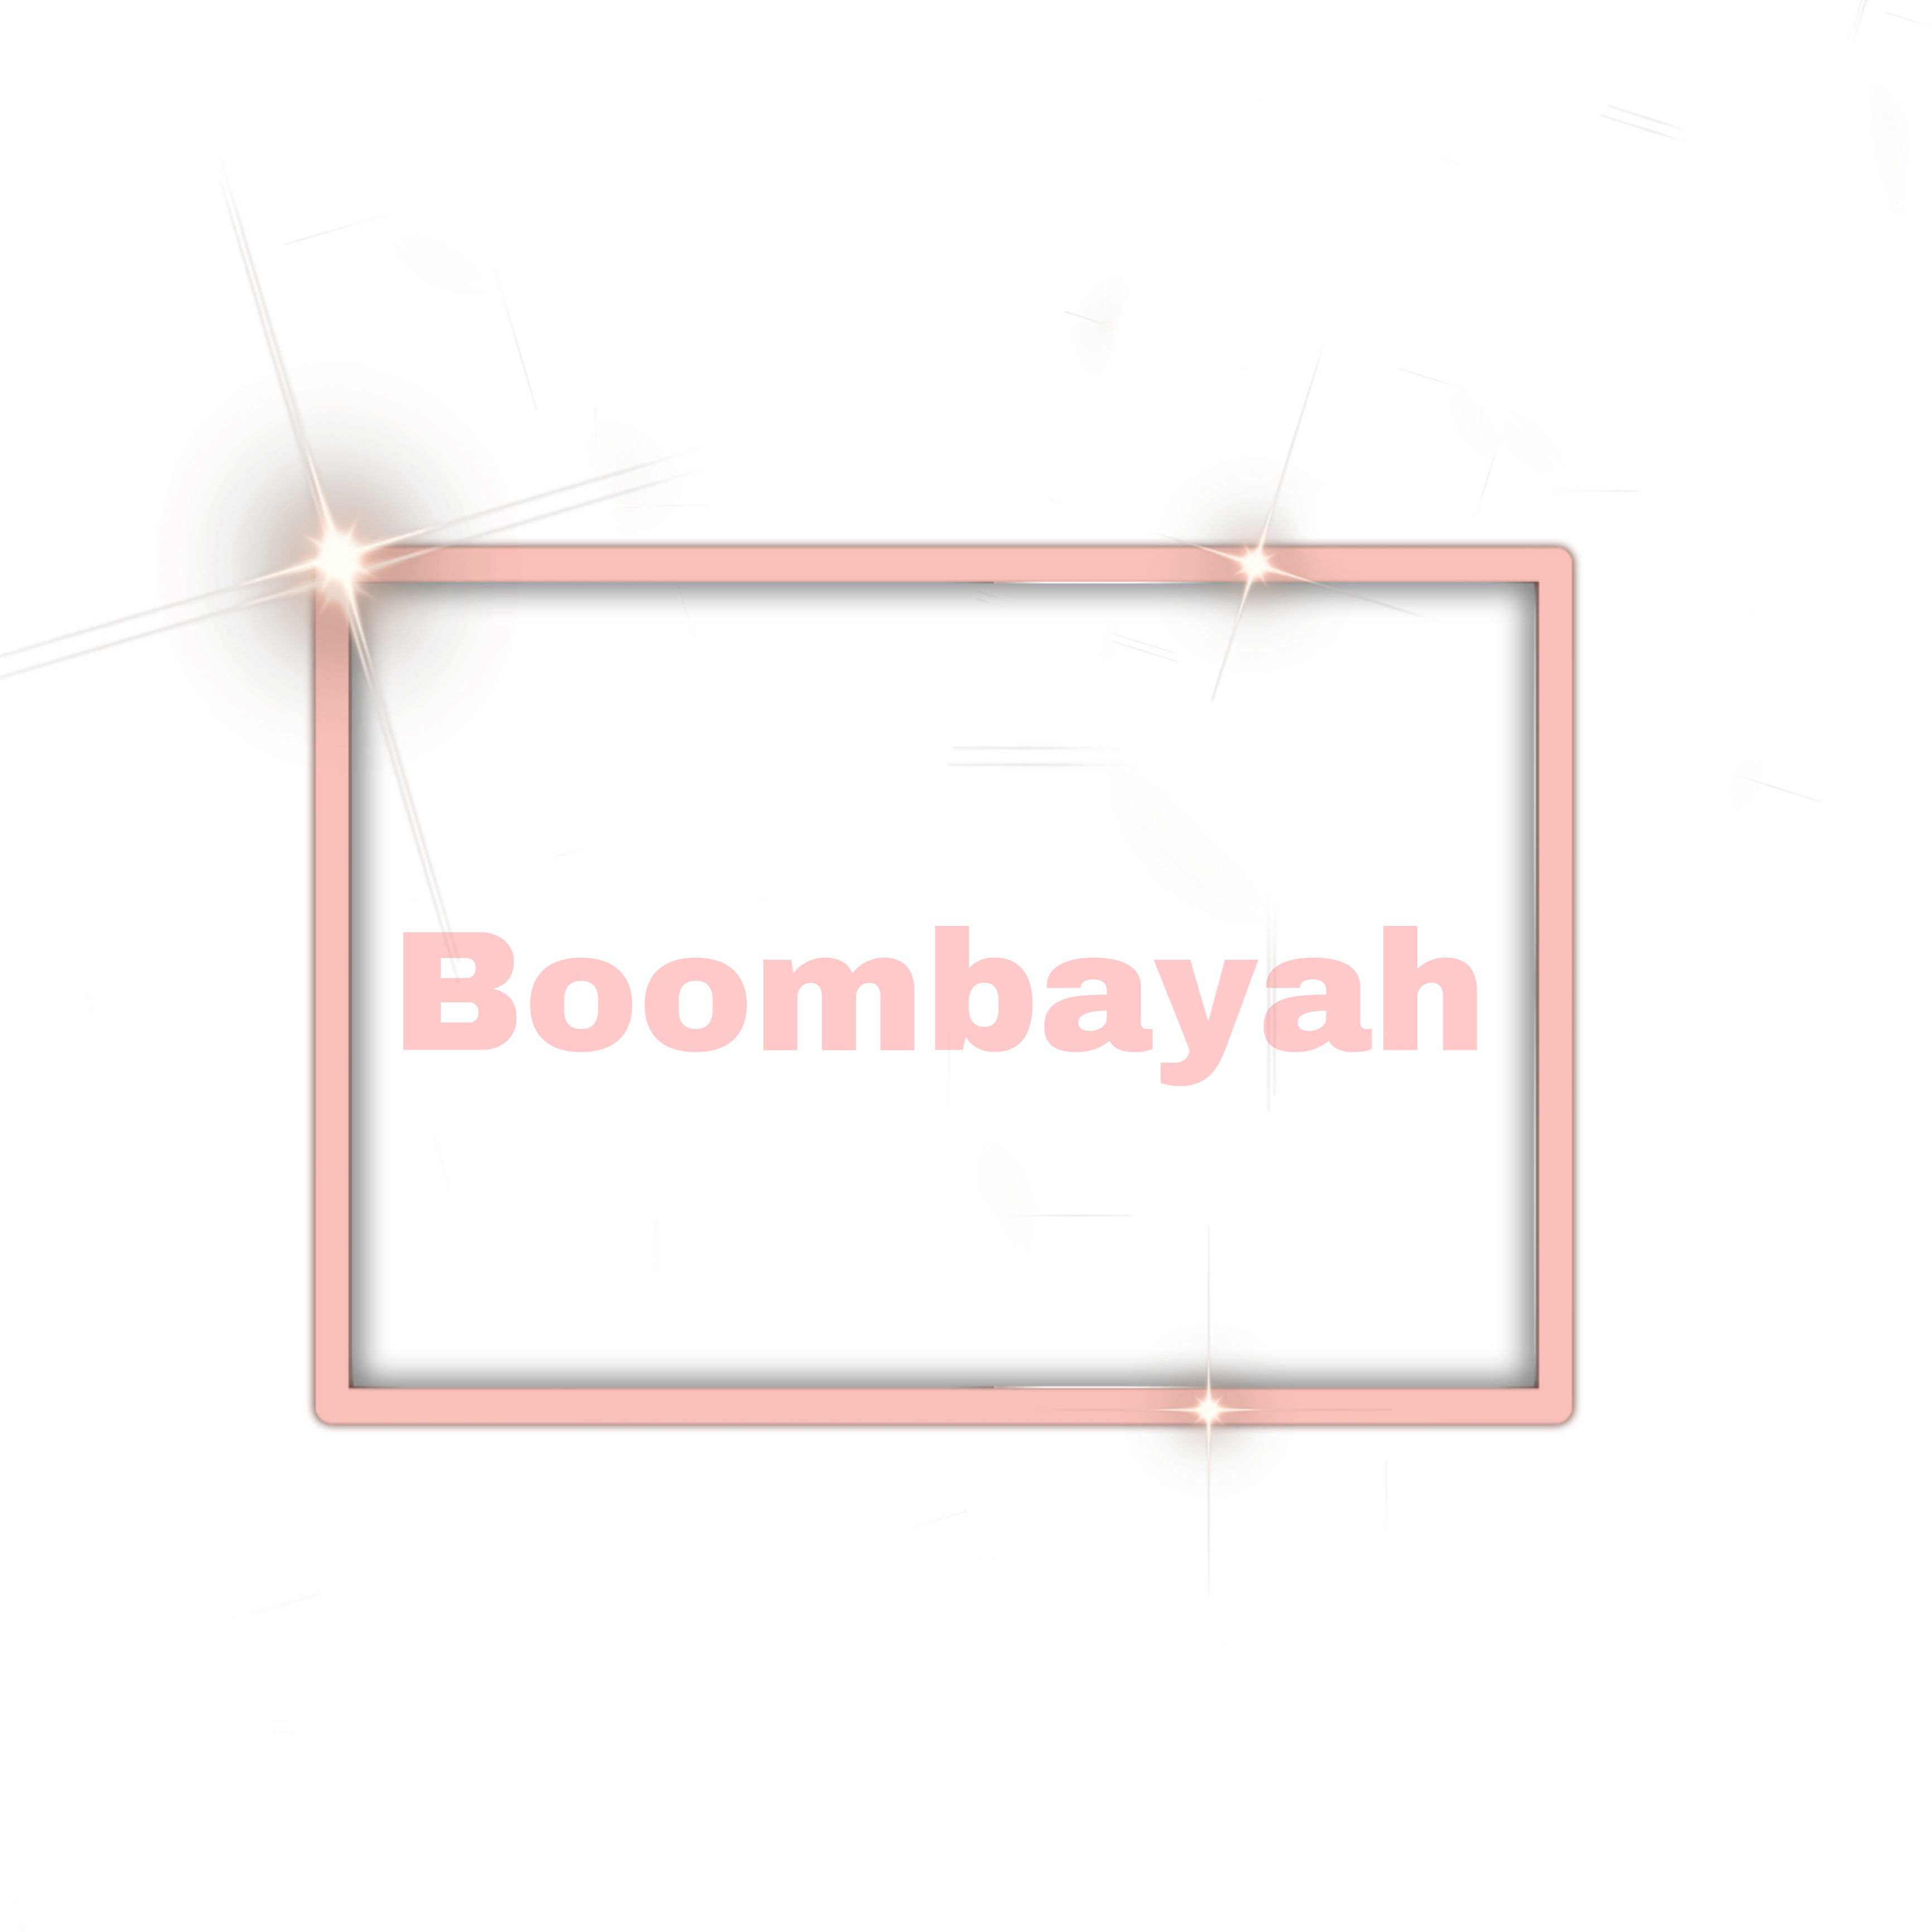 blackpink music song boombayah sticker by @giorno_giogio